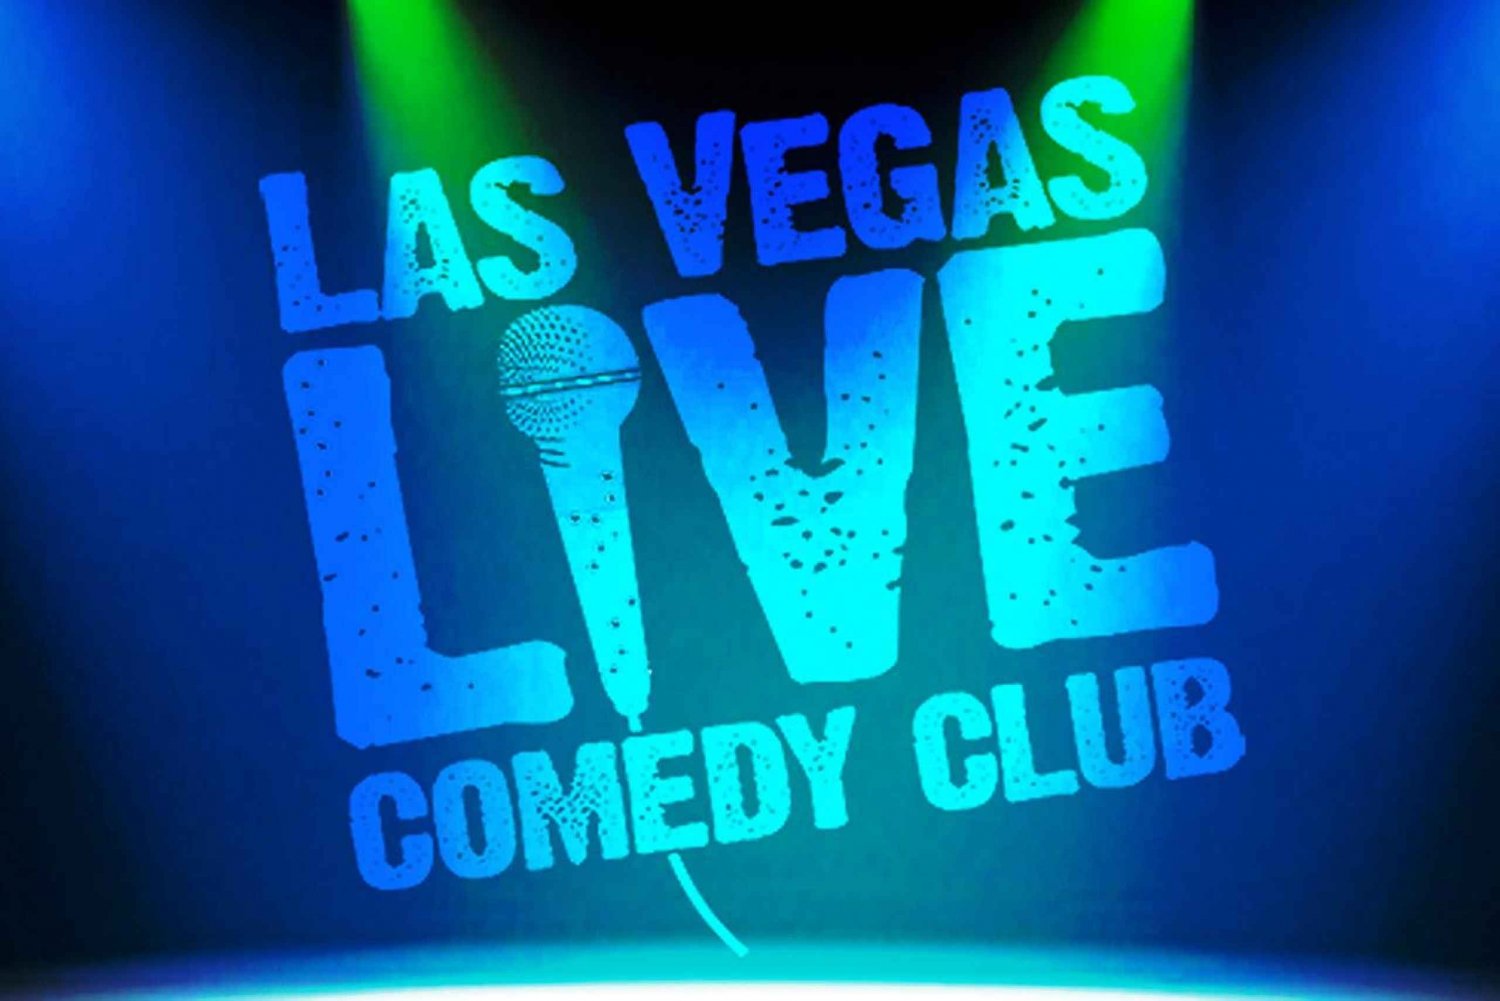 Las Vegas: Live Comedy Club Biljetter